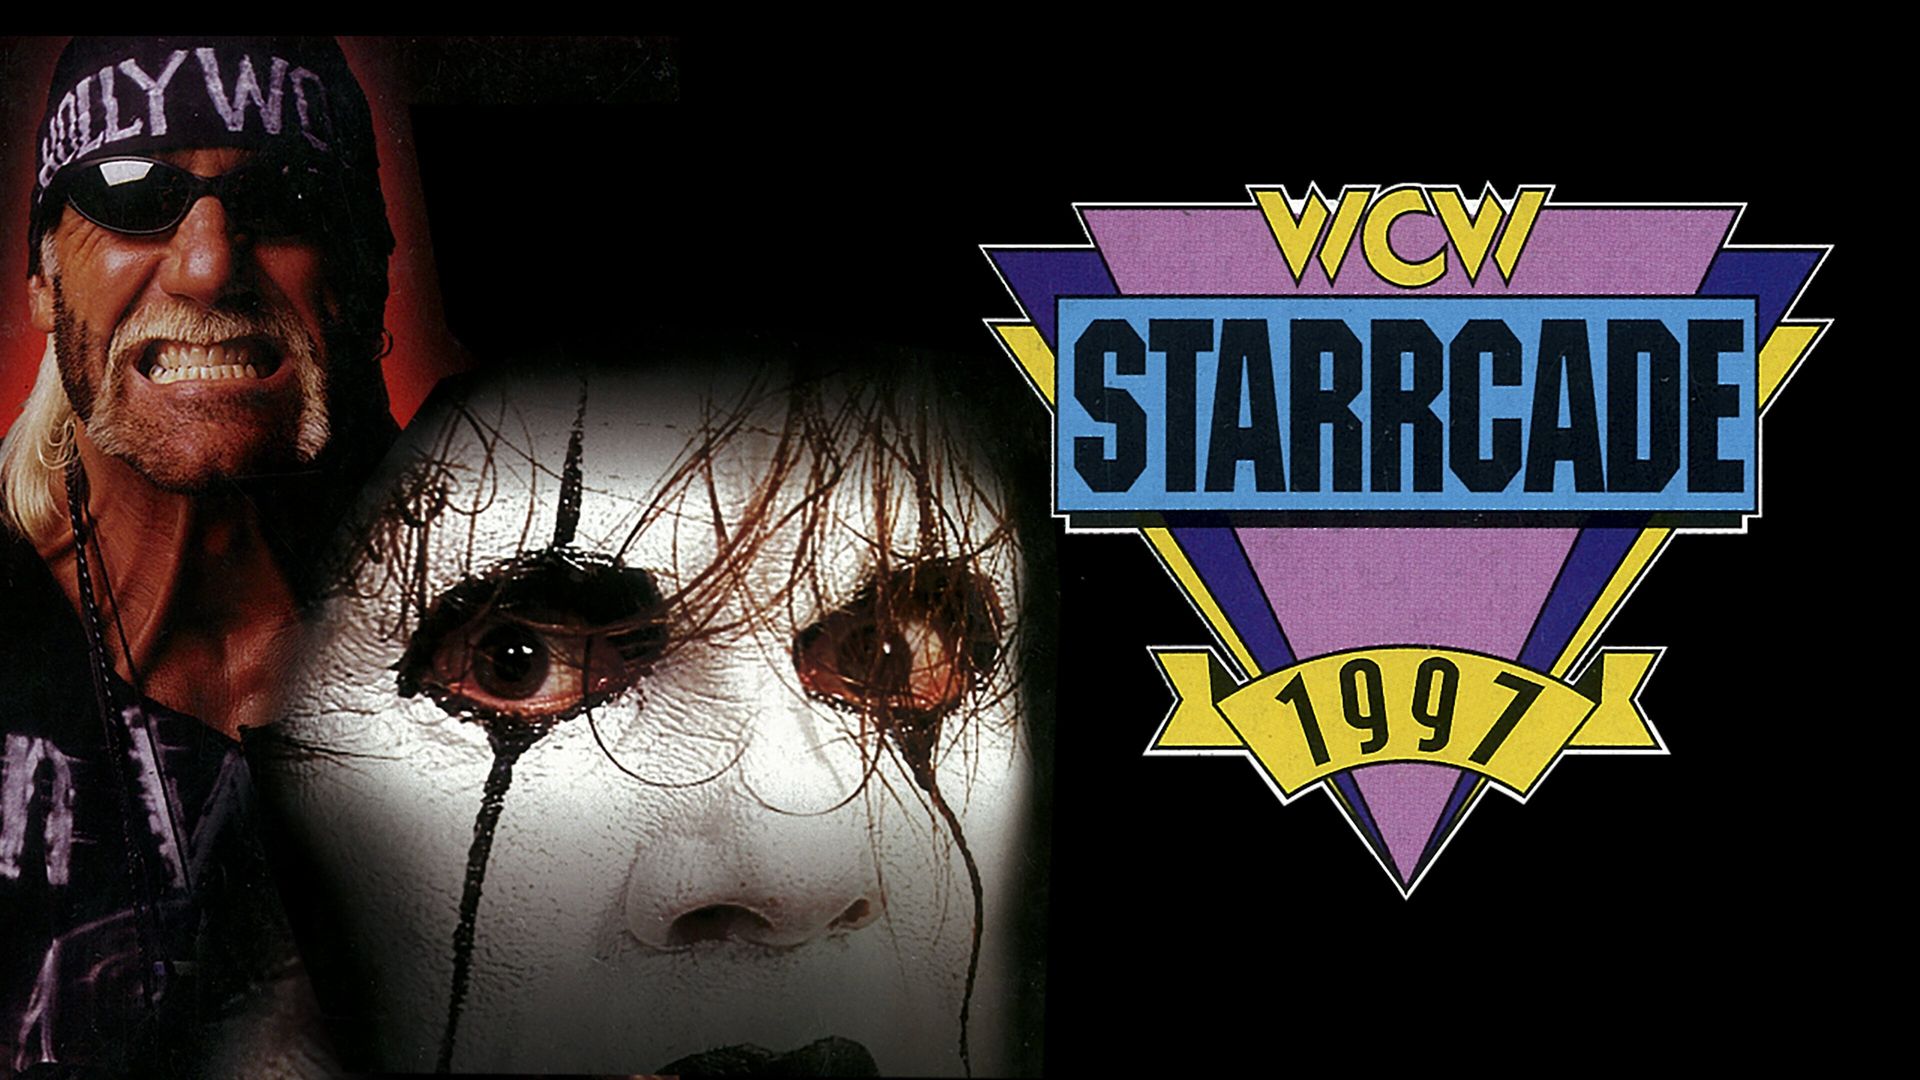 WCW Starrcade 1997 background